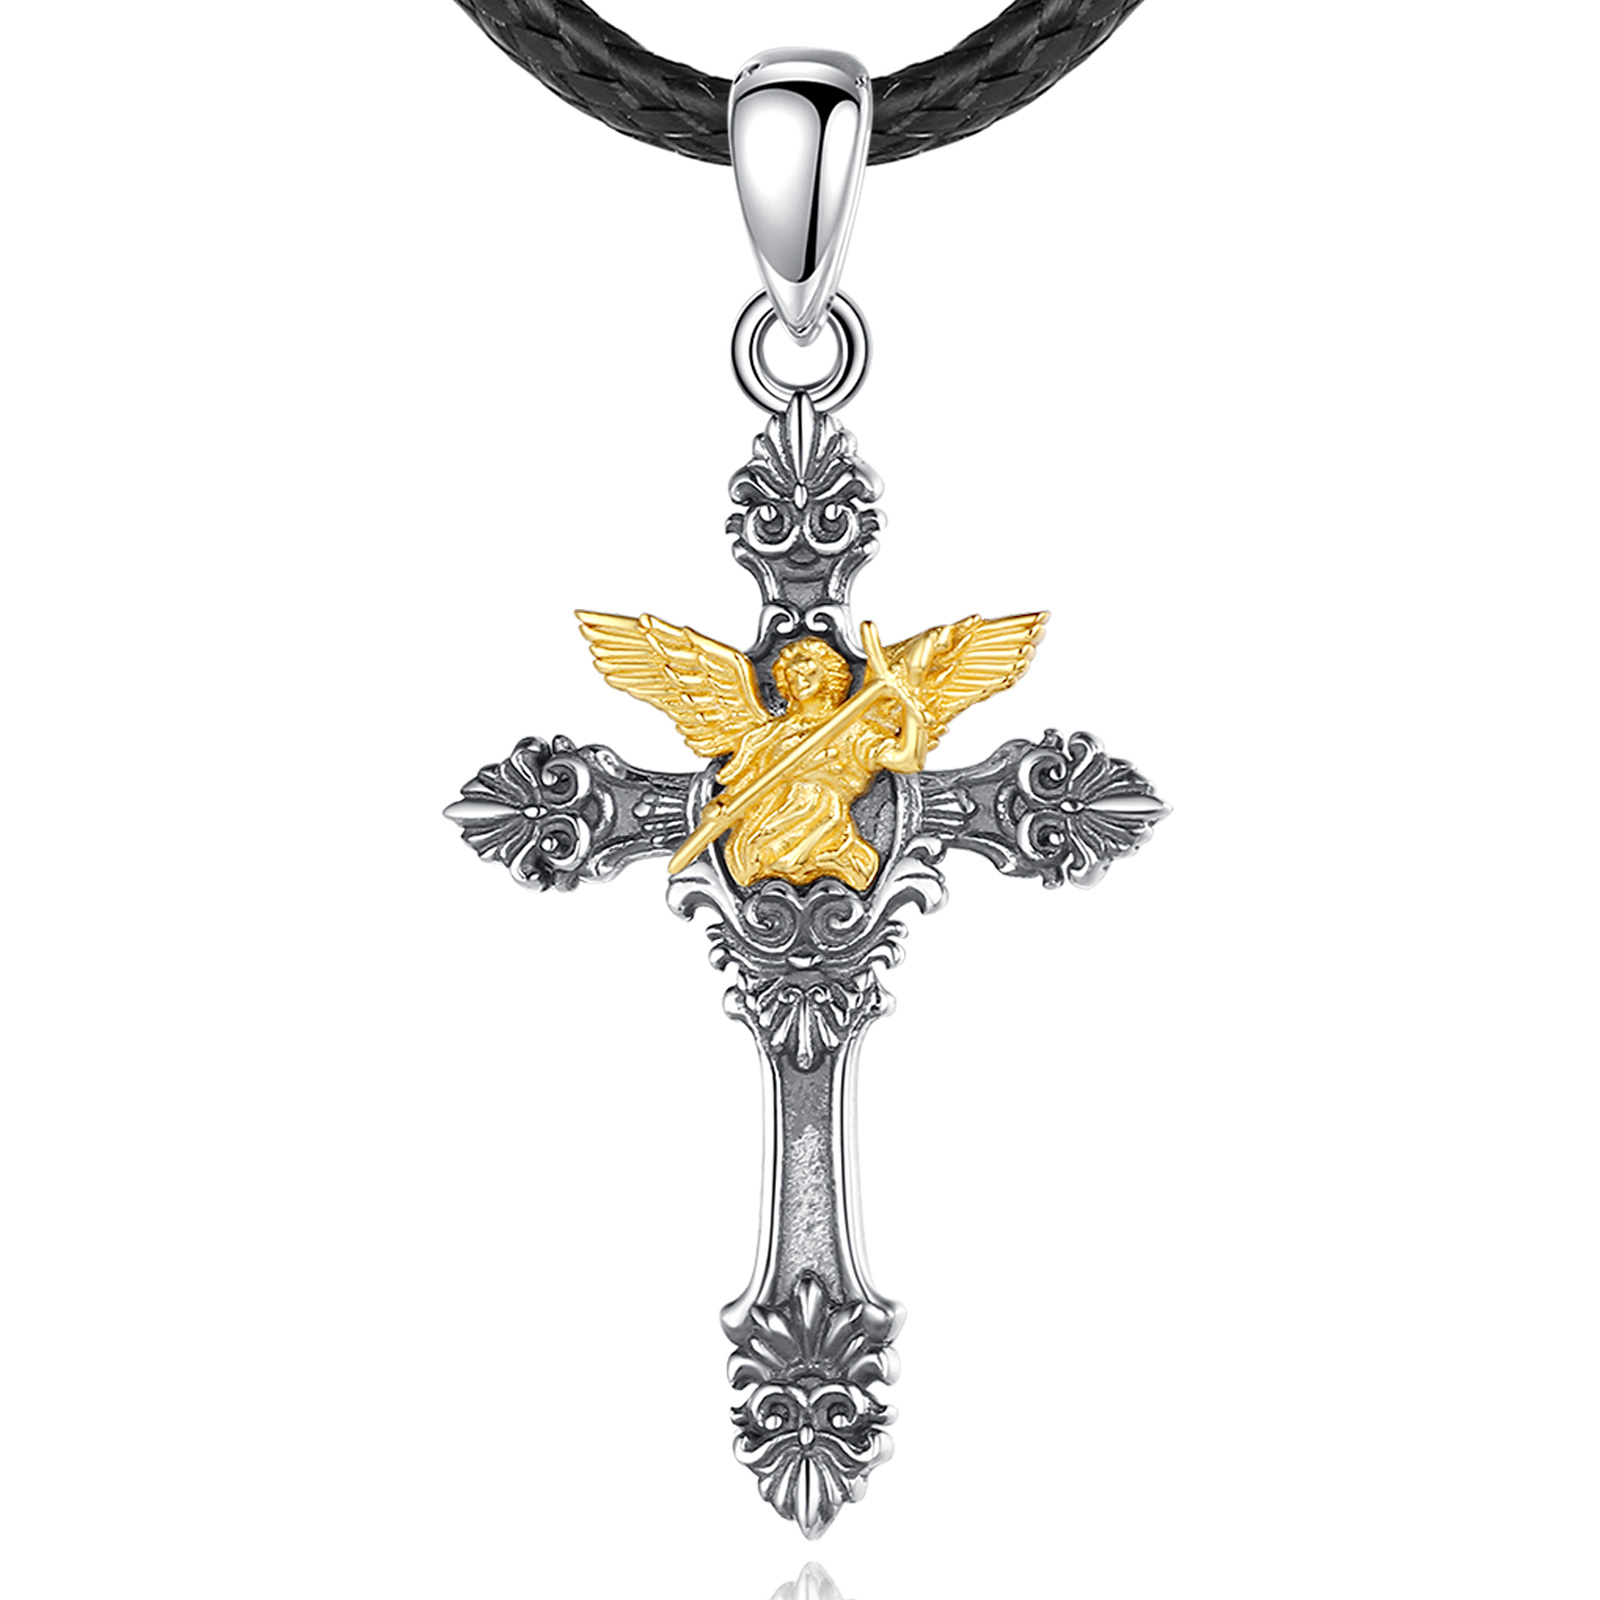 Merryshine 925 Sterling Silver Vintage Embossment Style Christian Jesus Cross Pendant Necklace for Men